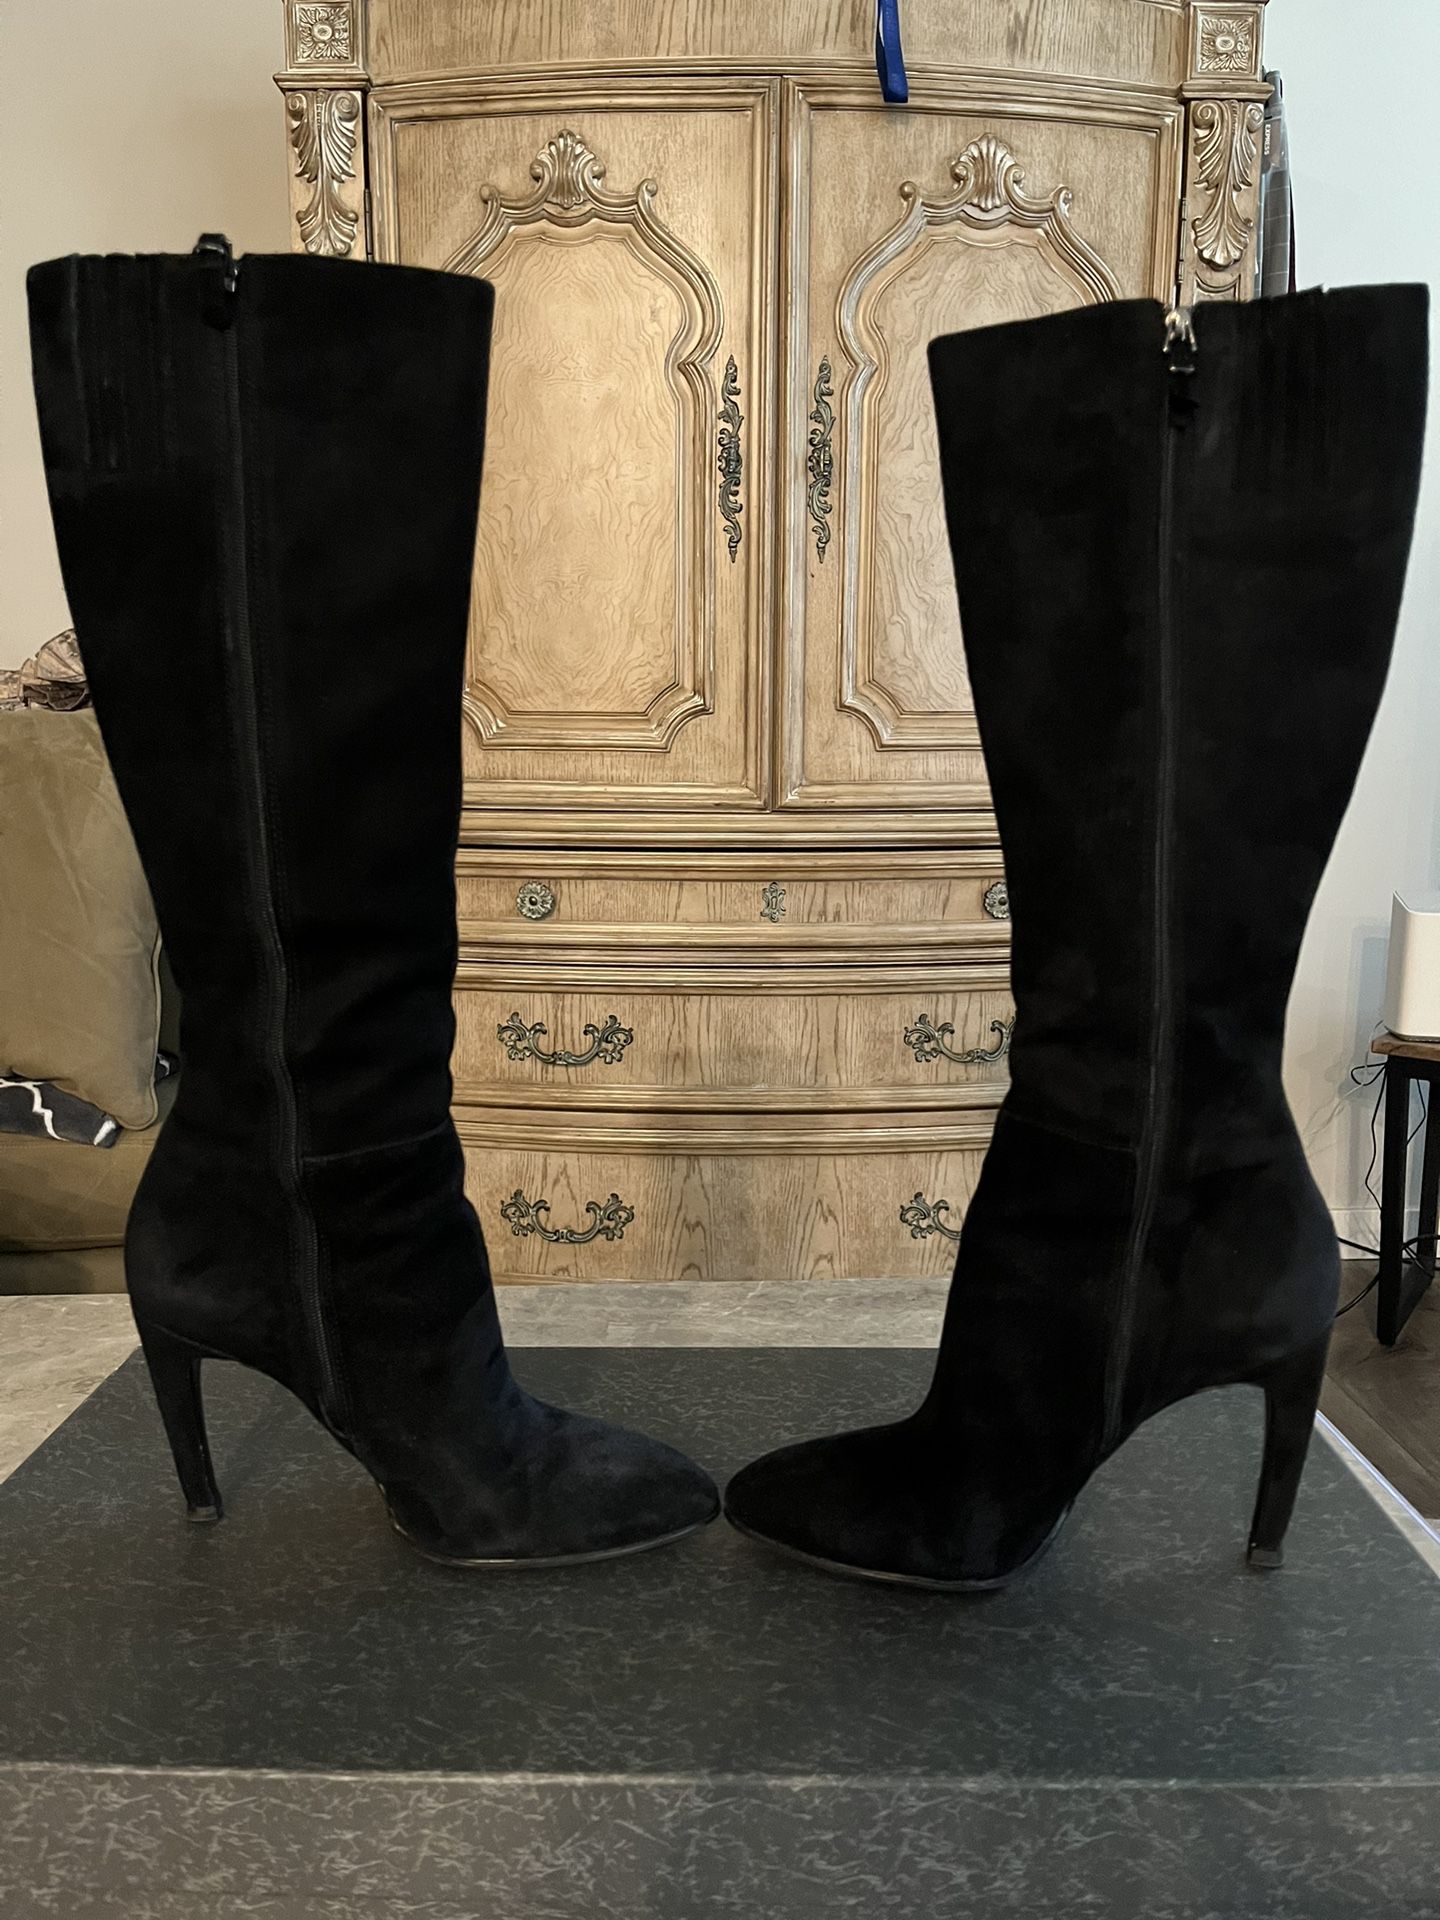 Via Spiga Women’s Black Suede Knee-Hi Boots, Size 7 1/2 Org. $398 / PENDING SALE